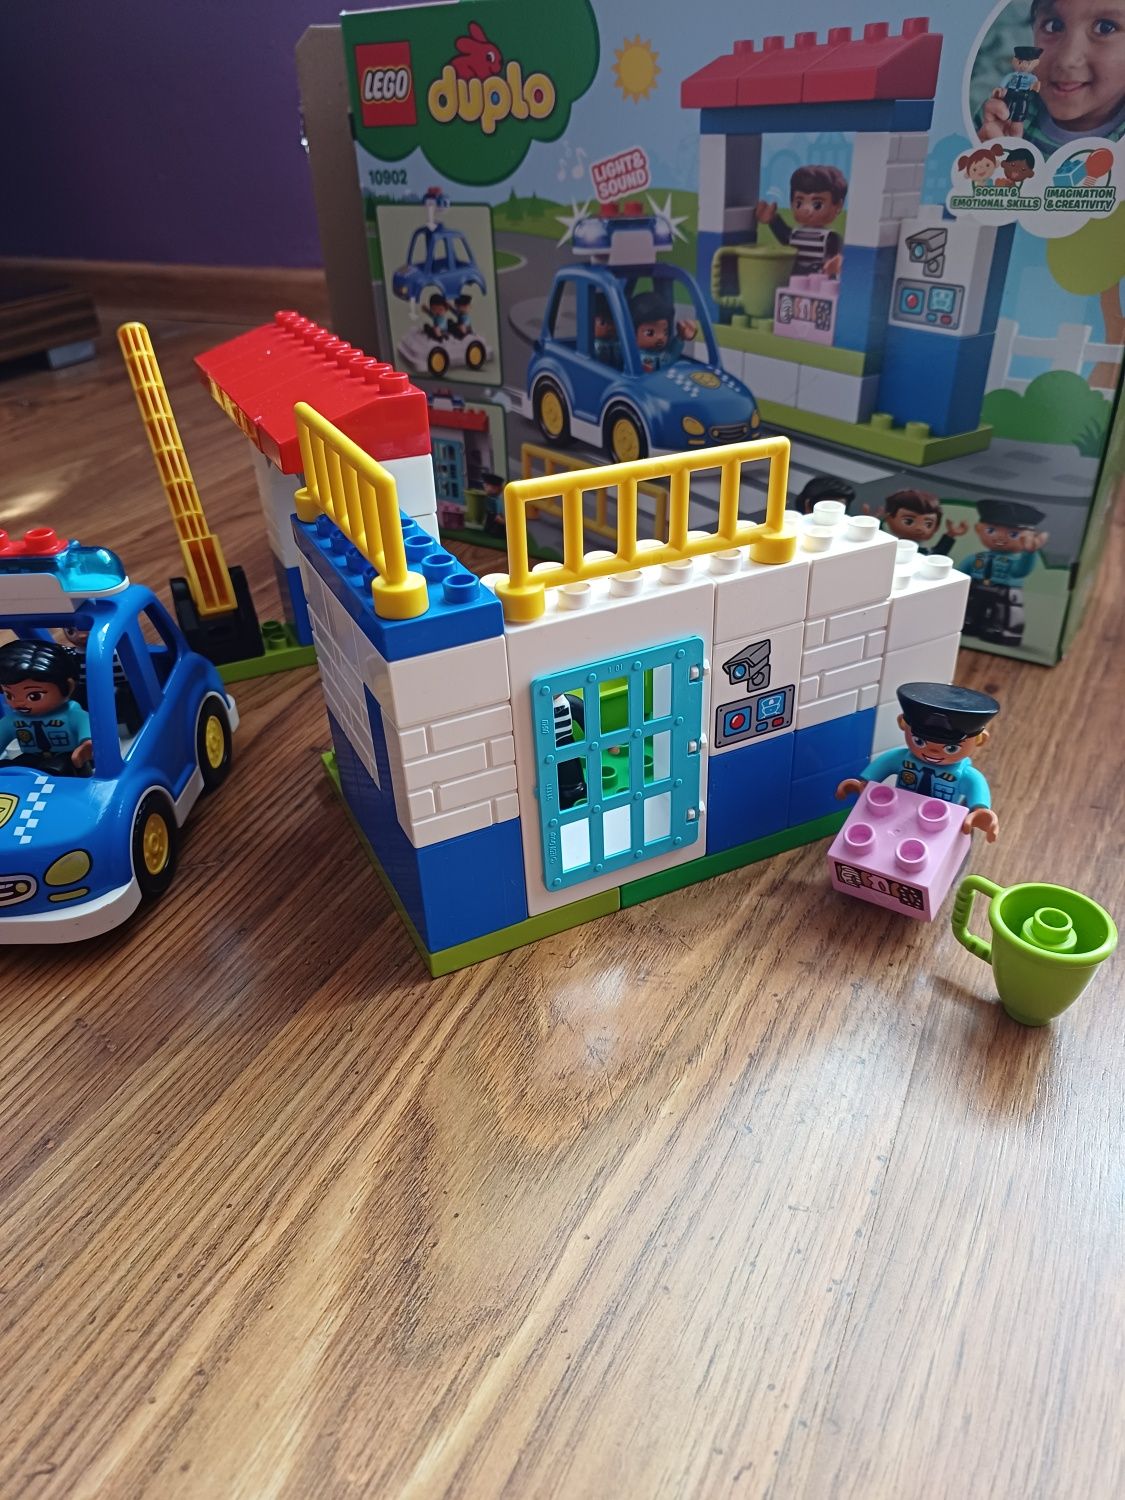 Lego duplo komisariat policji